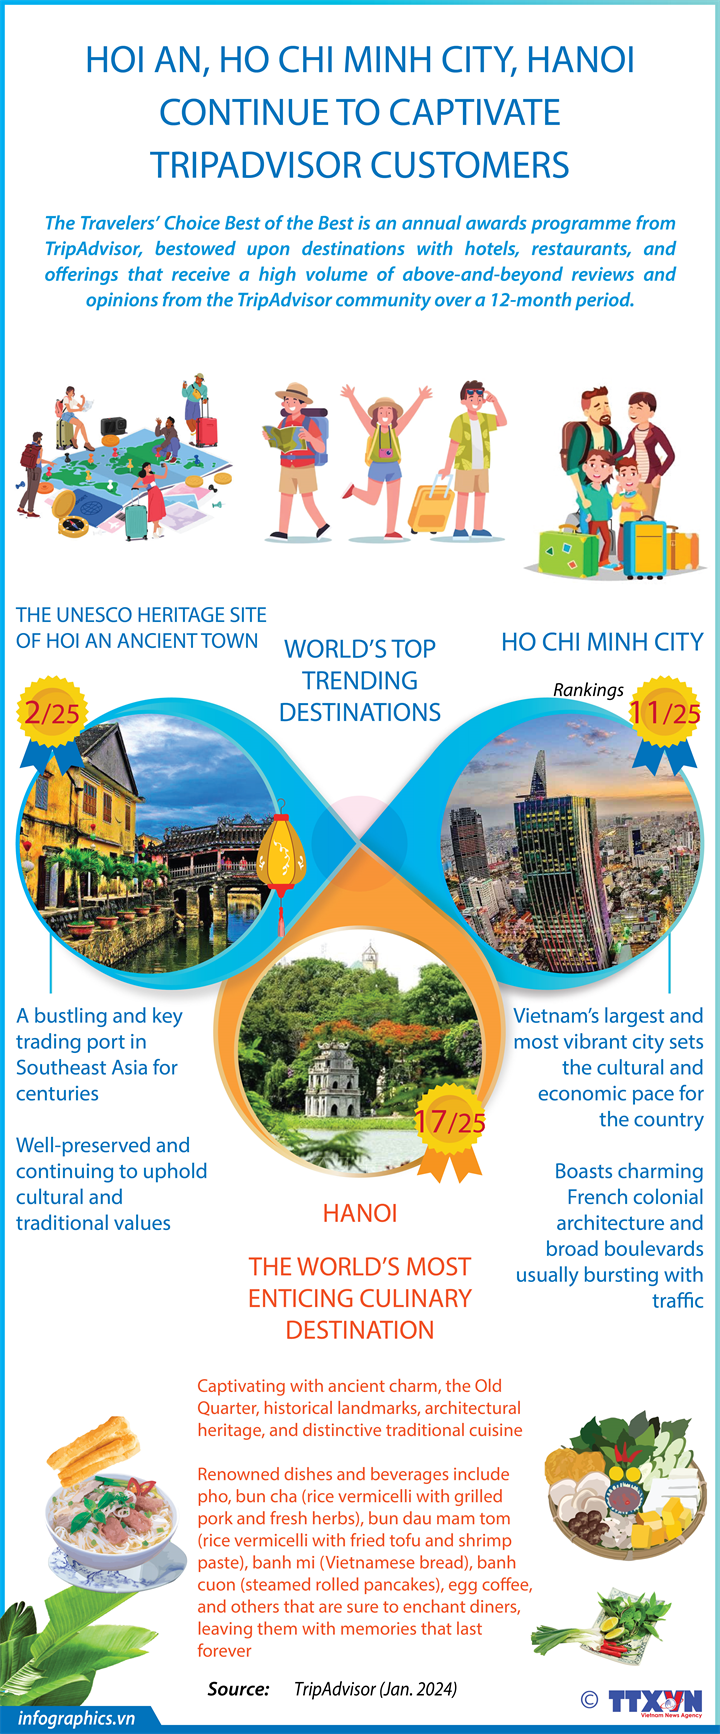 Hoi An, Ho Chi Minh City, Hanoi continue to win over TripAdvisor customers